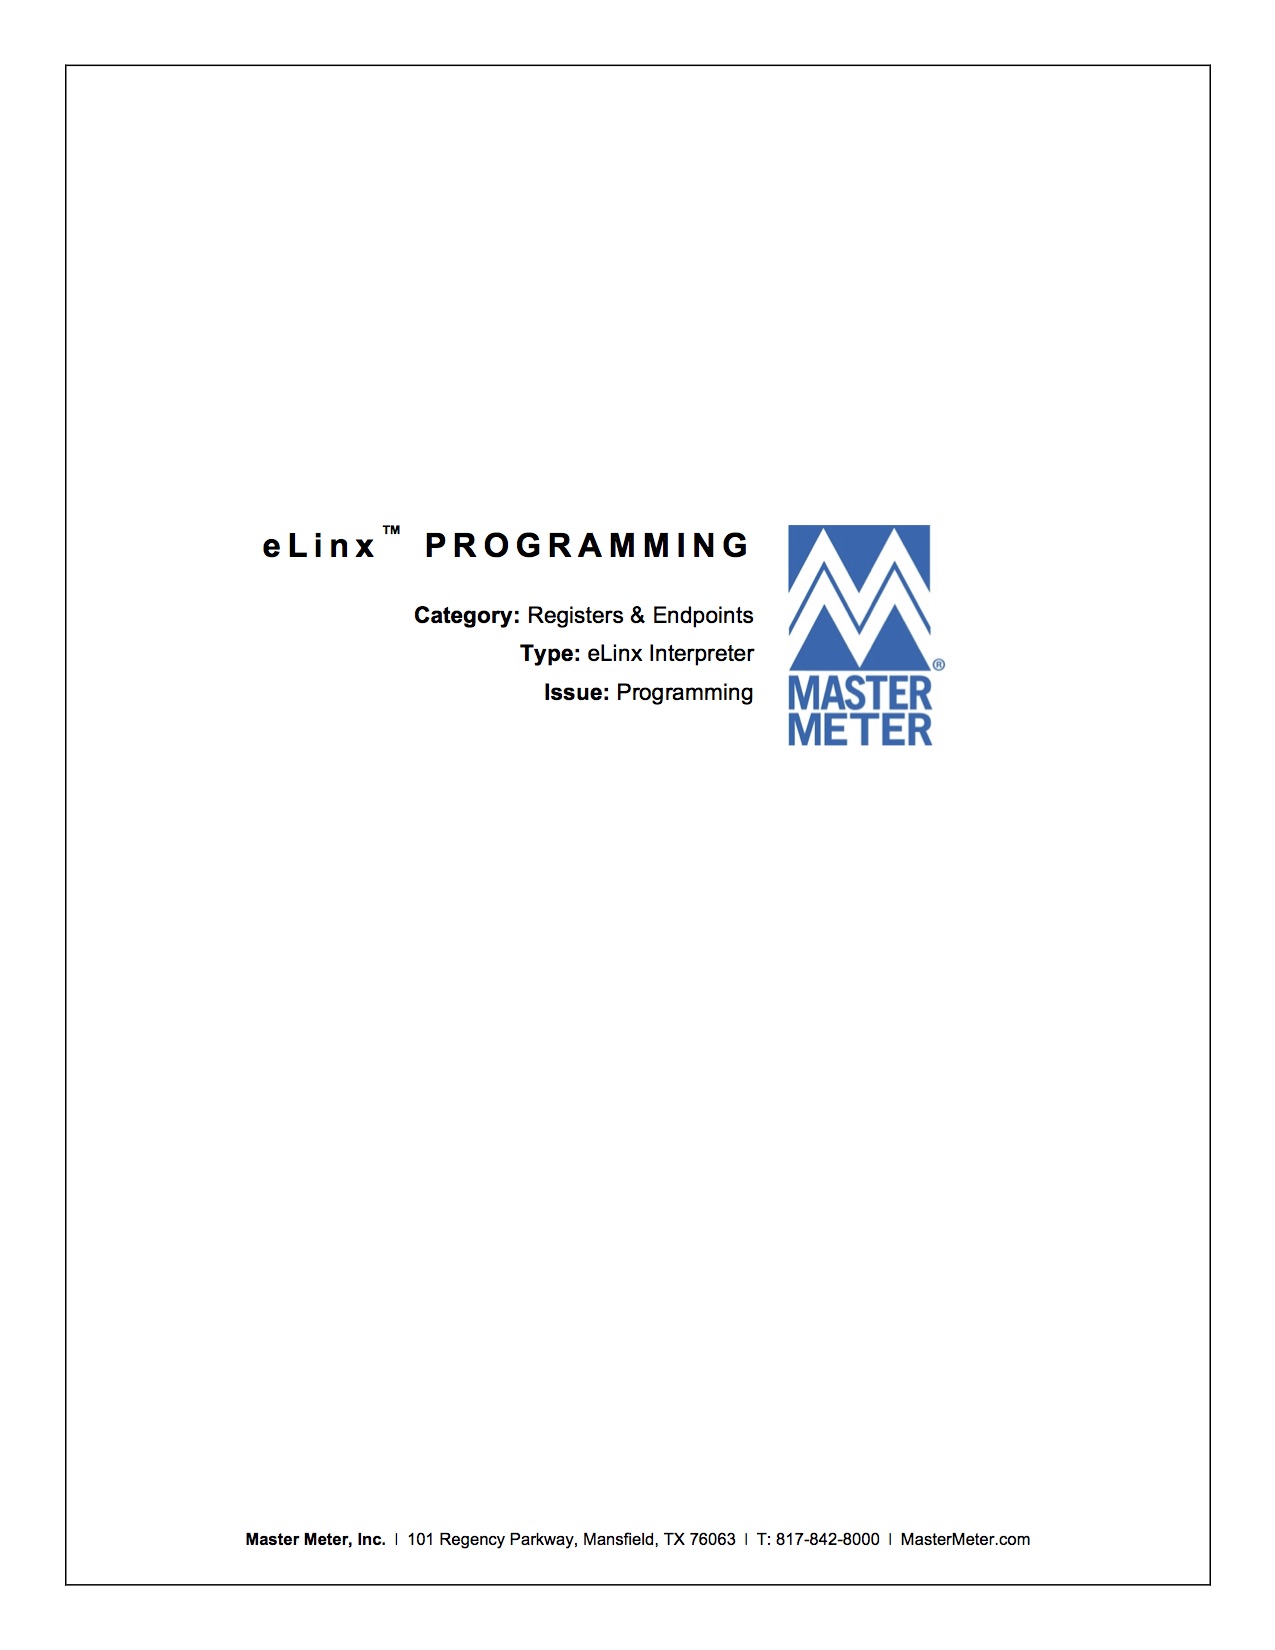 eLinx Programming Guide